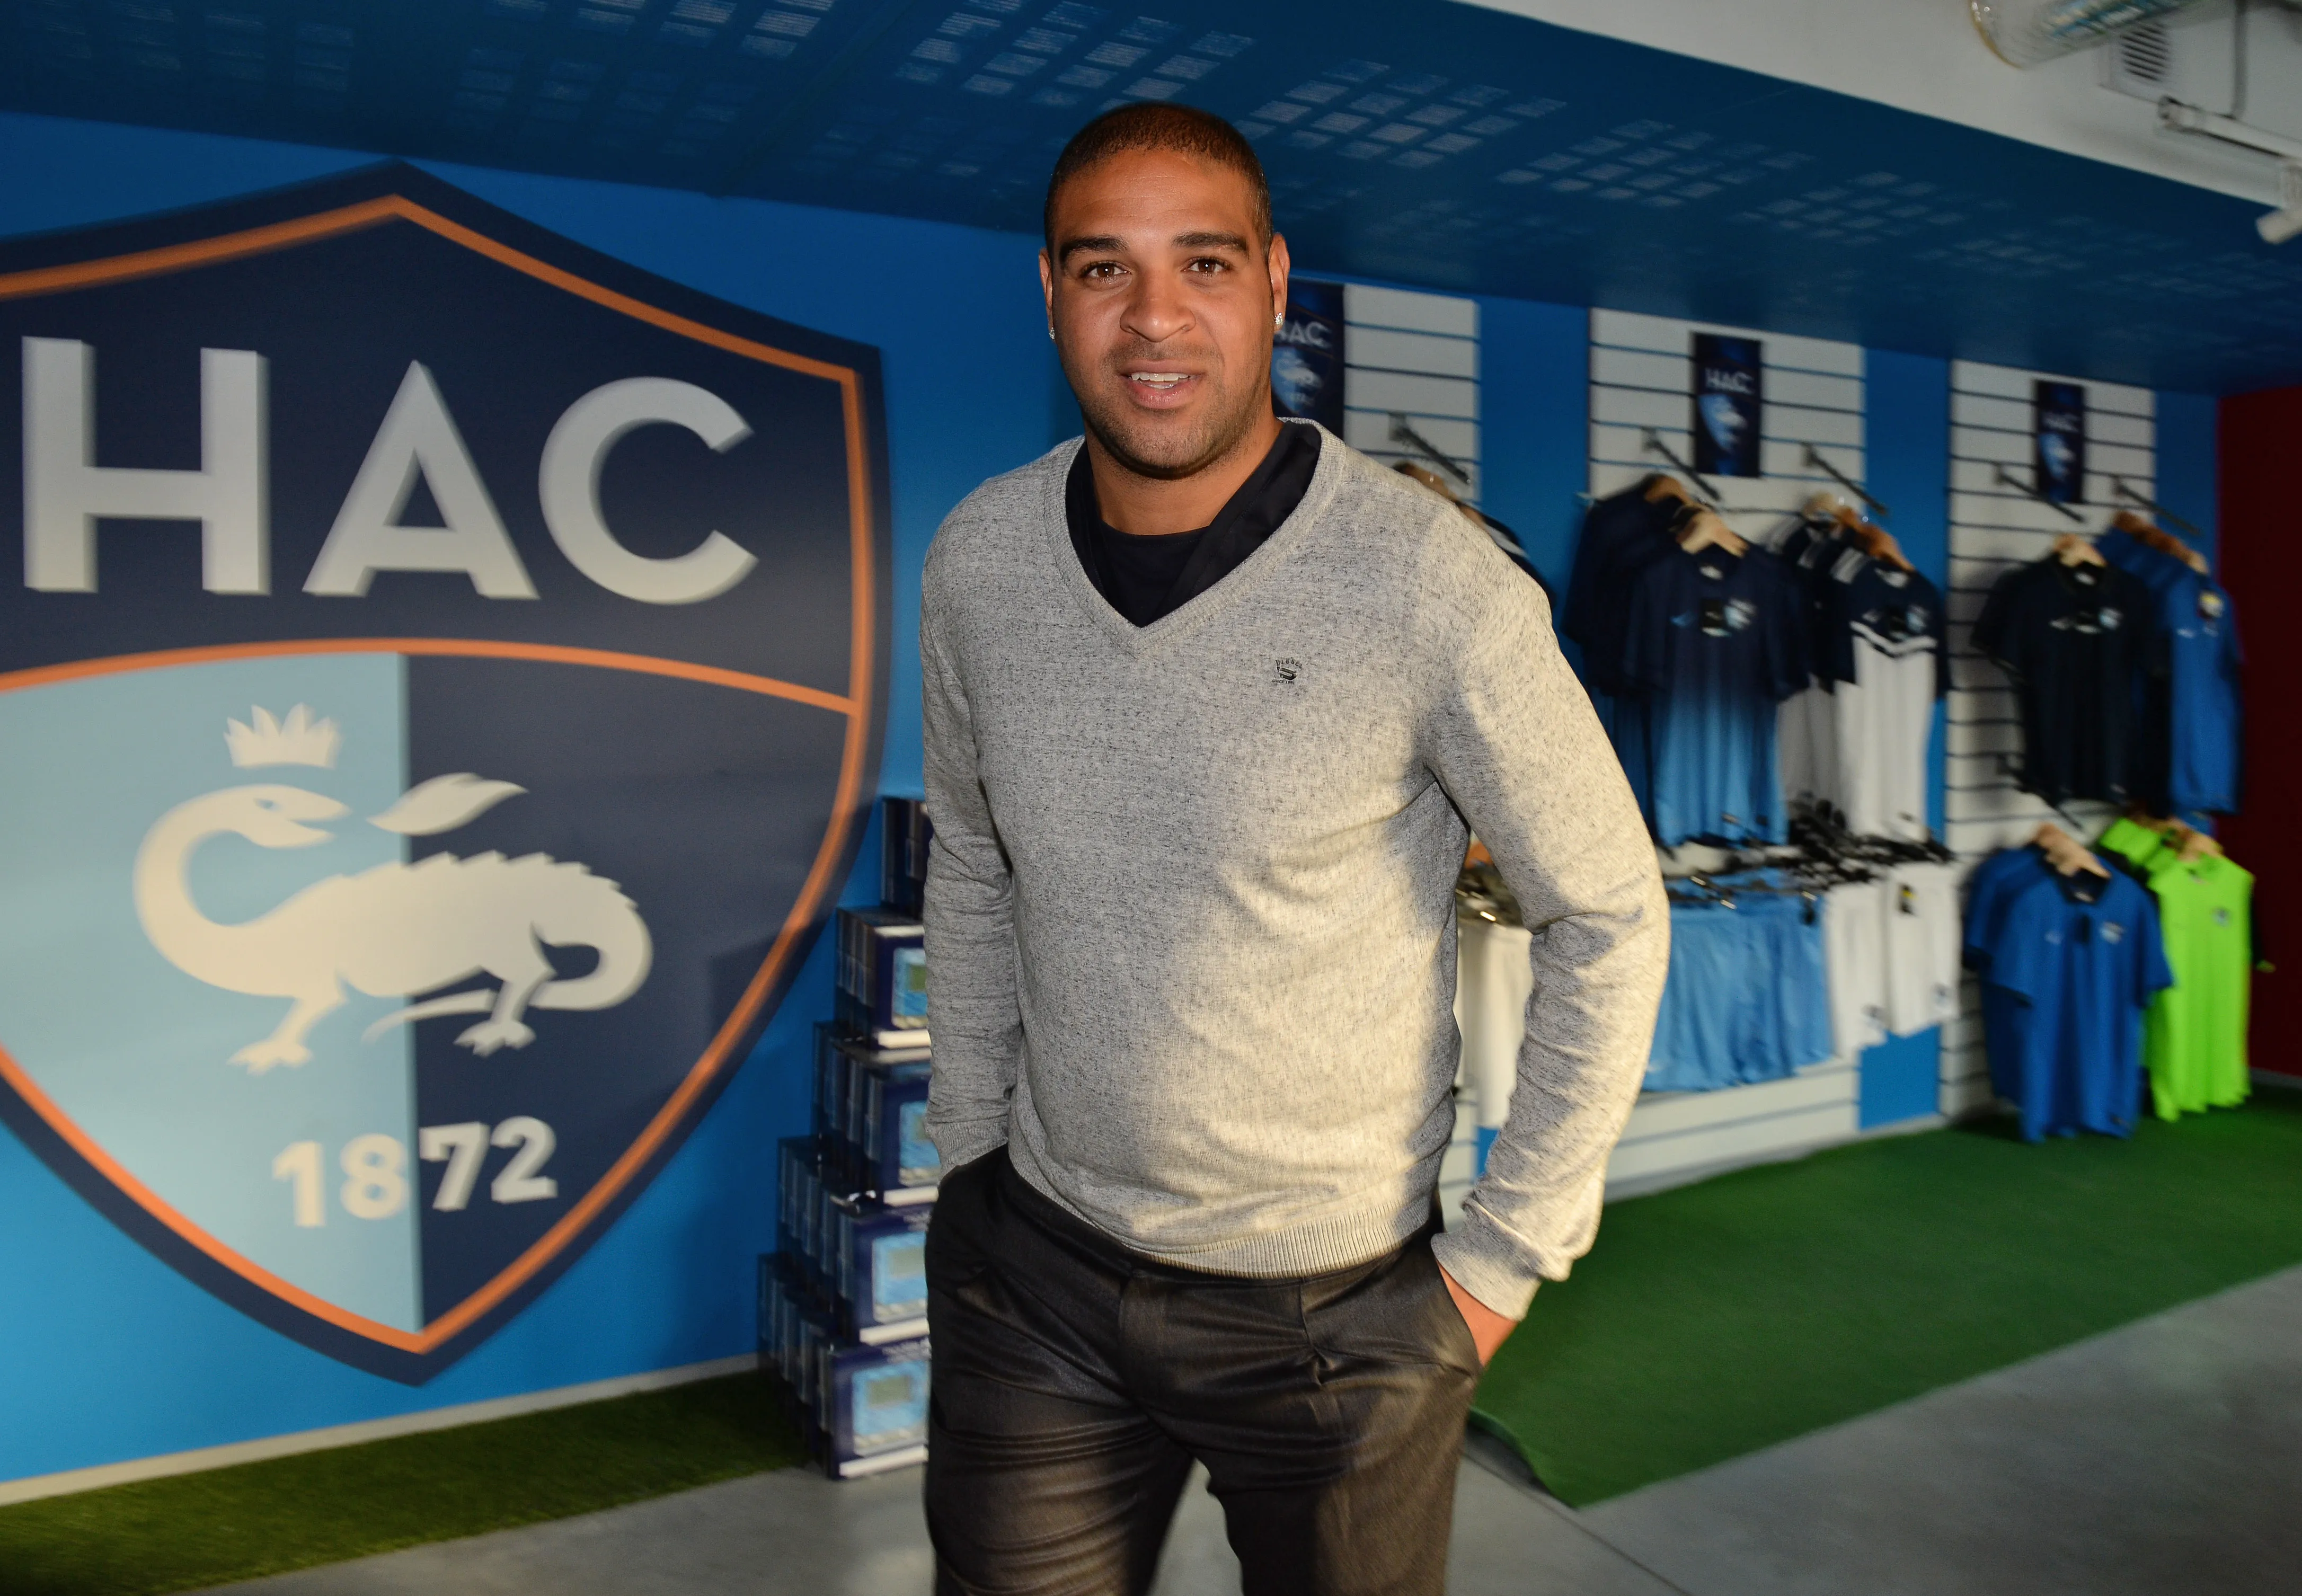 Top 50 : Transferts avortés (1er) : Adriano au Havre